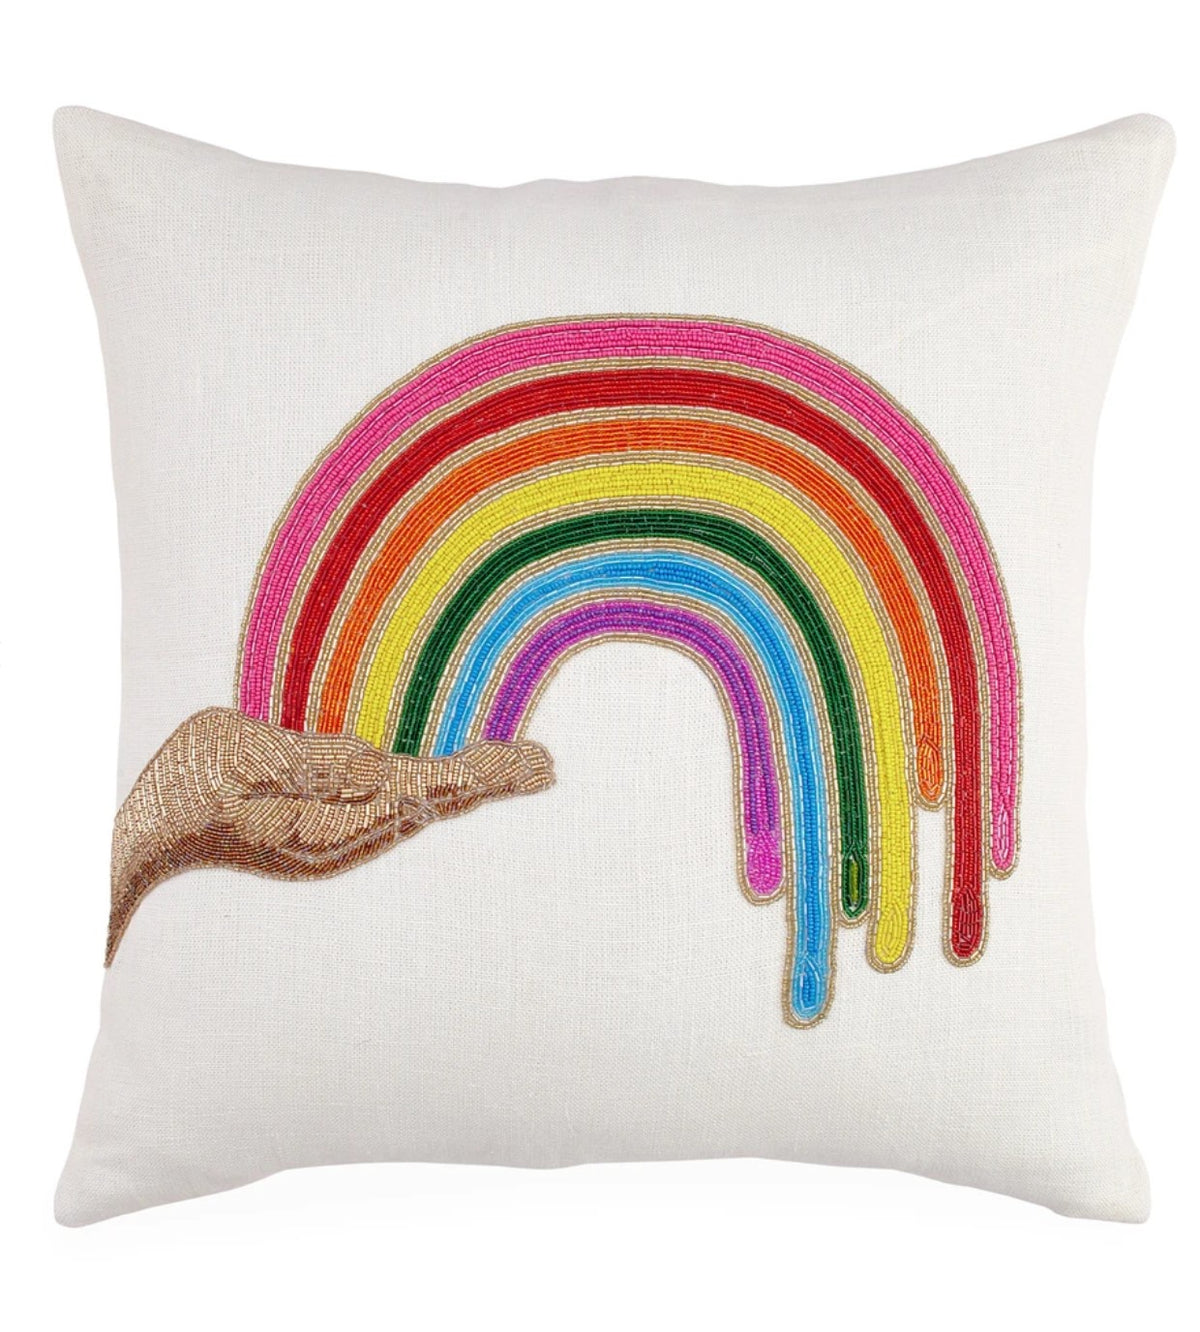 Rainbow Hand Beaded Pillow by Jonathan Adler